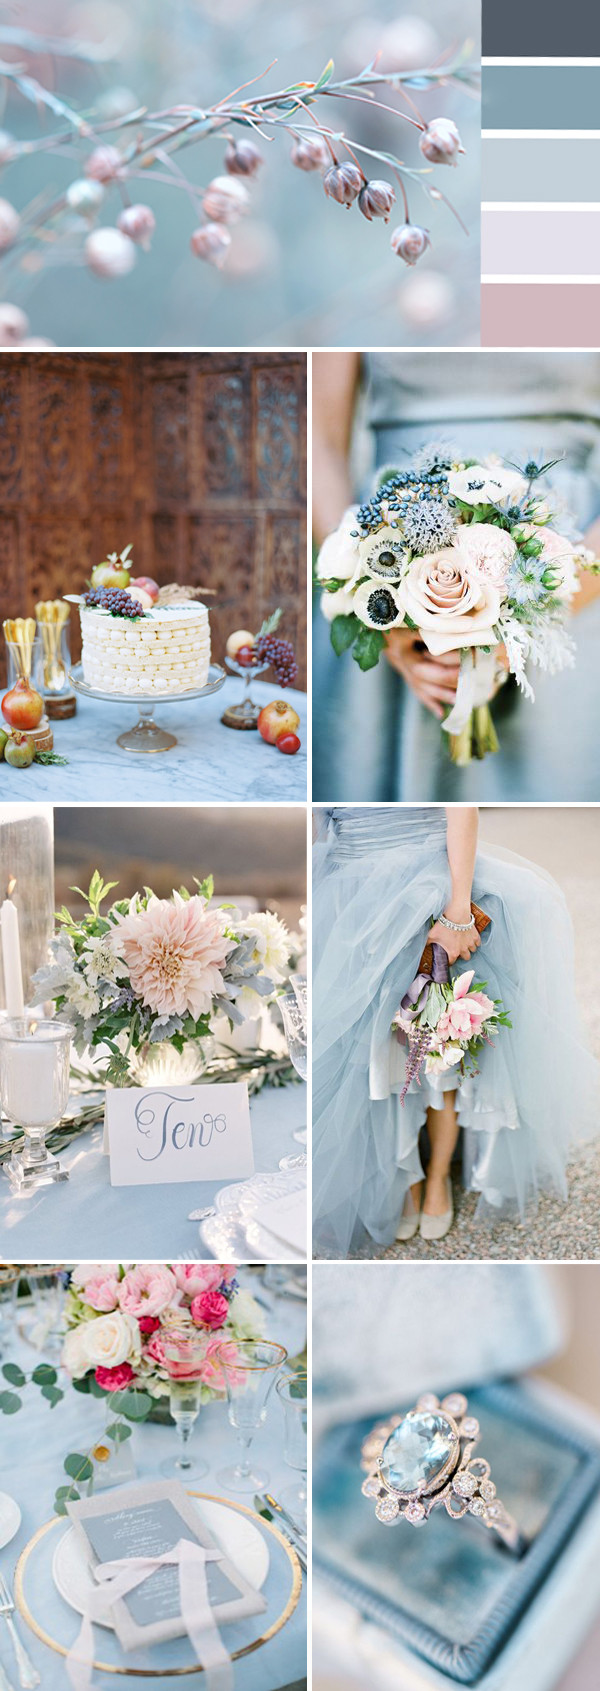 Wedding Color Themes
 Top 10 Wedding Color Ideas for 2017 Spring – Stylish Wedd Blog